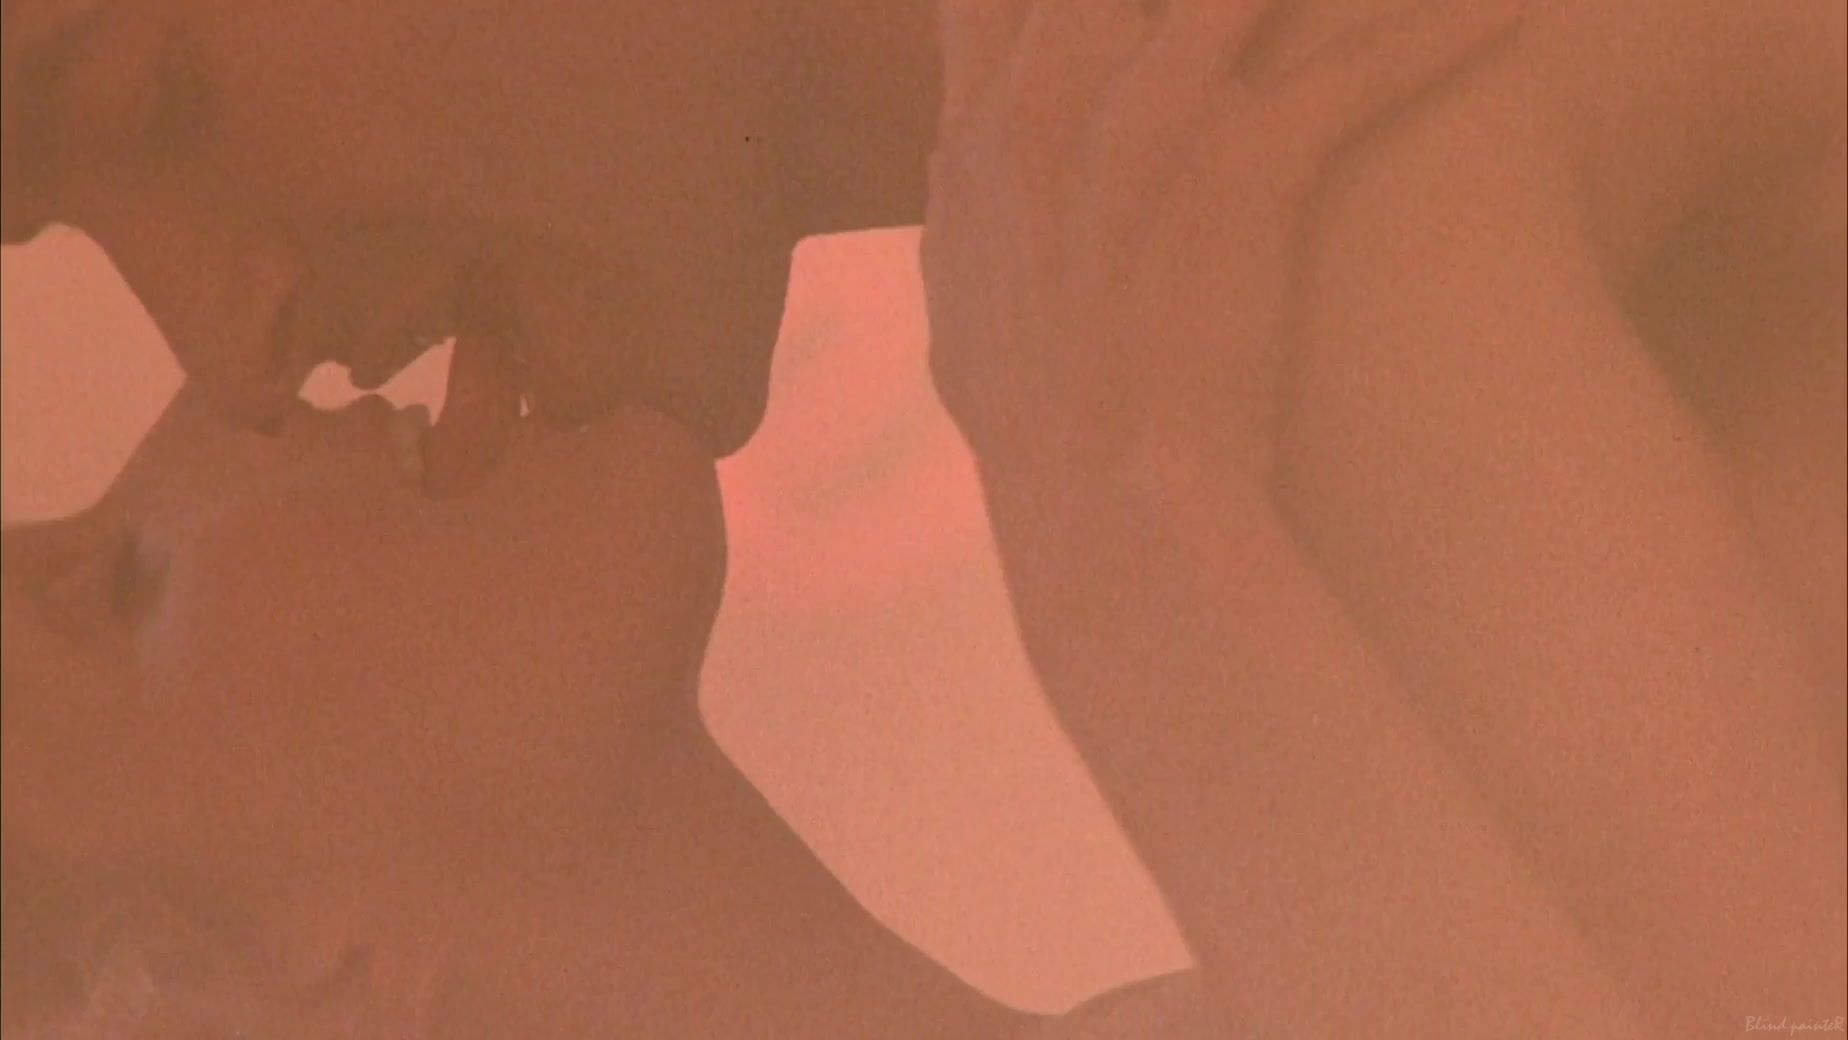 Roughsex Hot Nudity scene from Classic Adult Movie "Bolero" LatinaHDV - 1